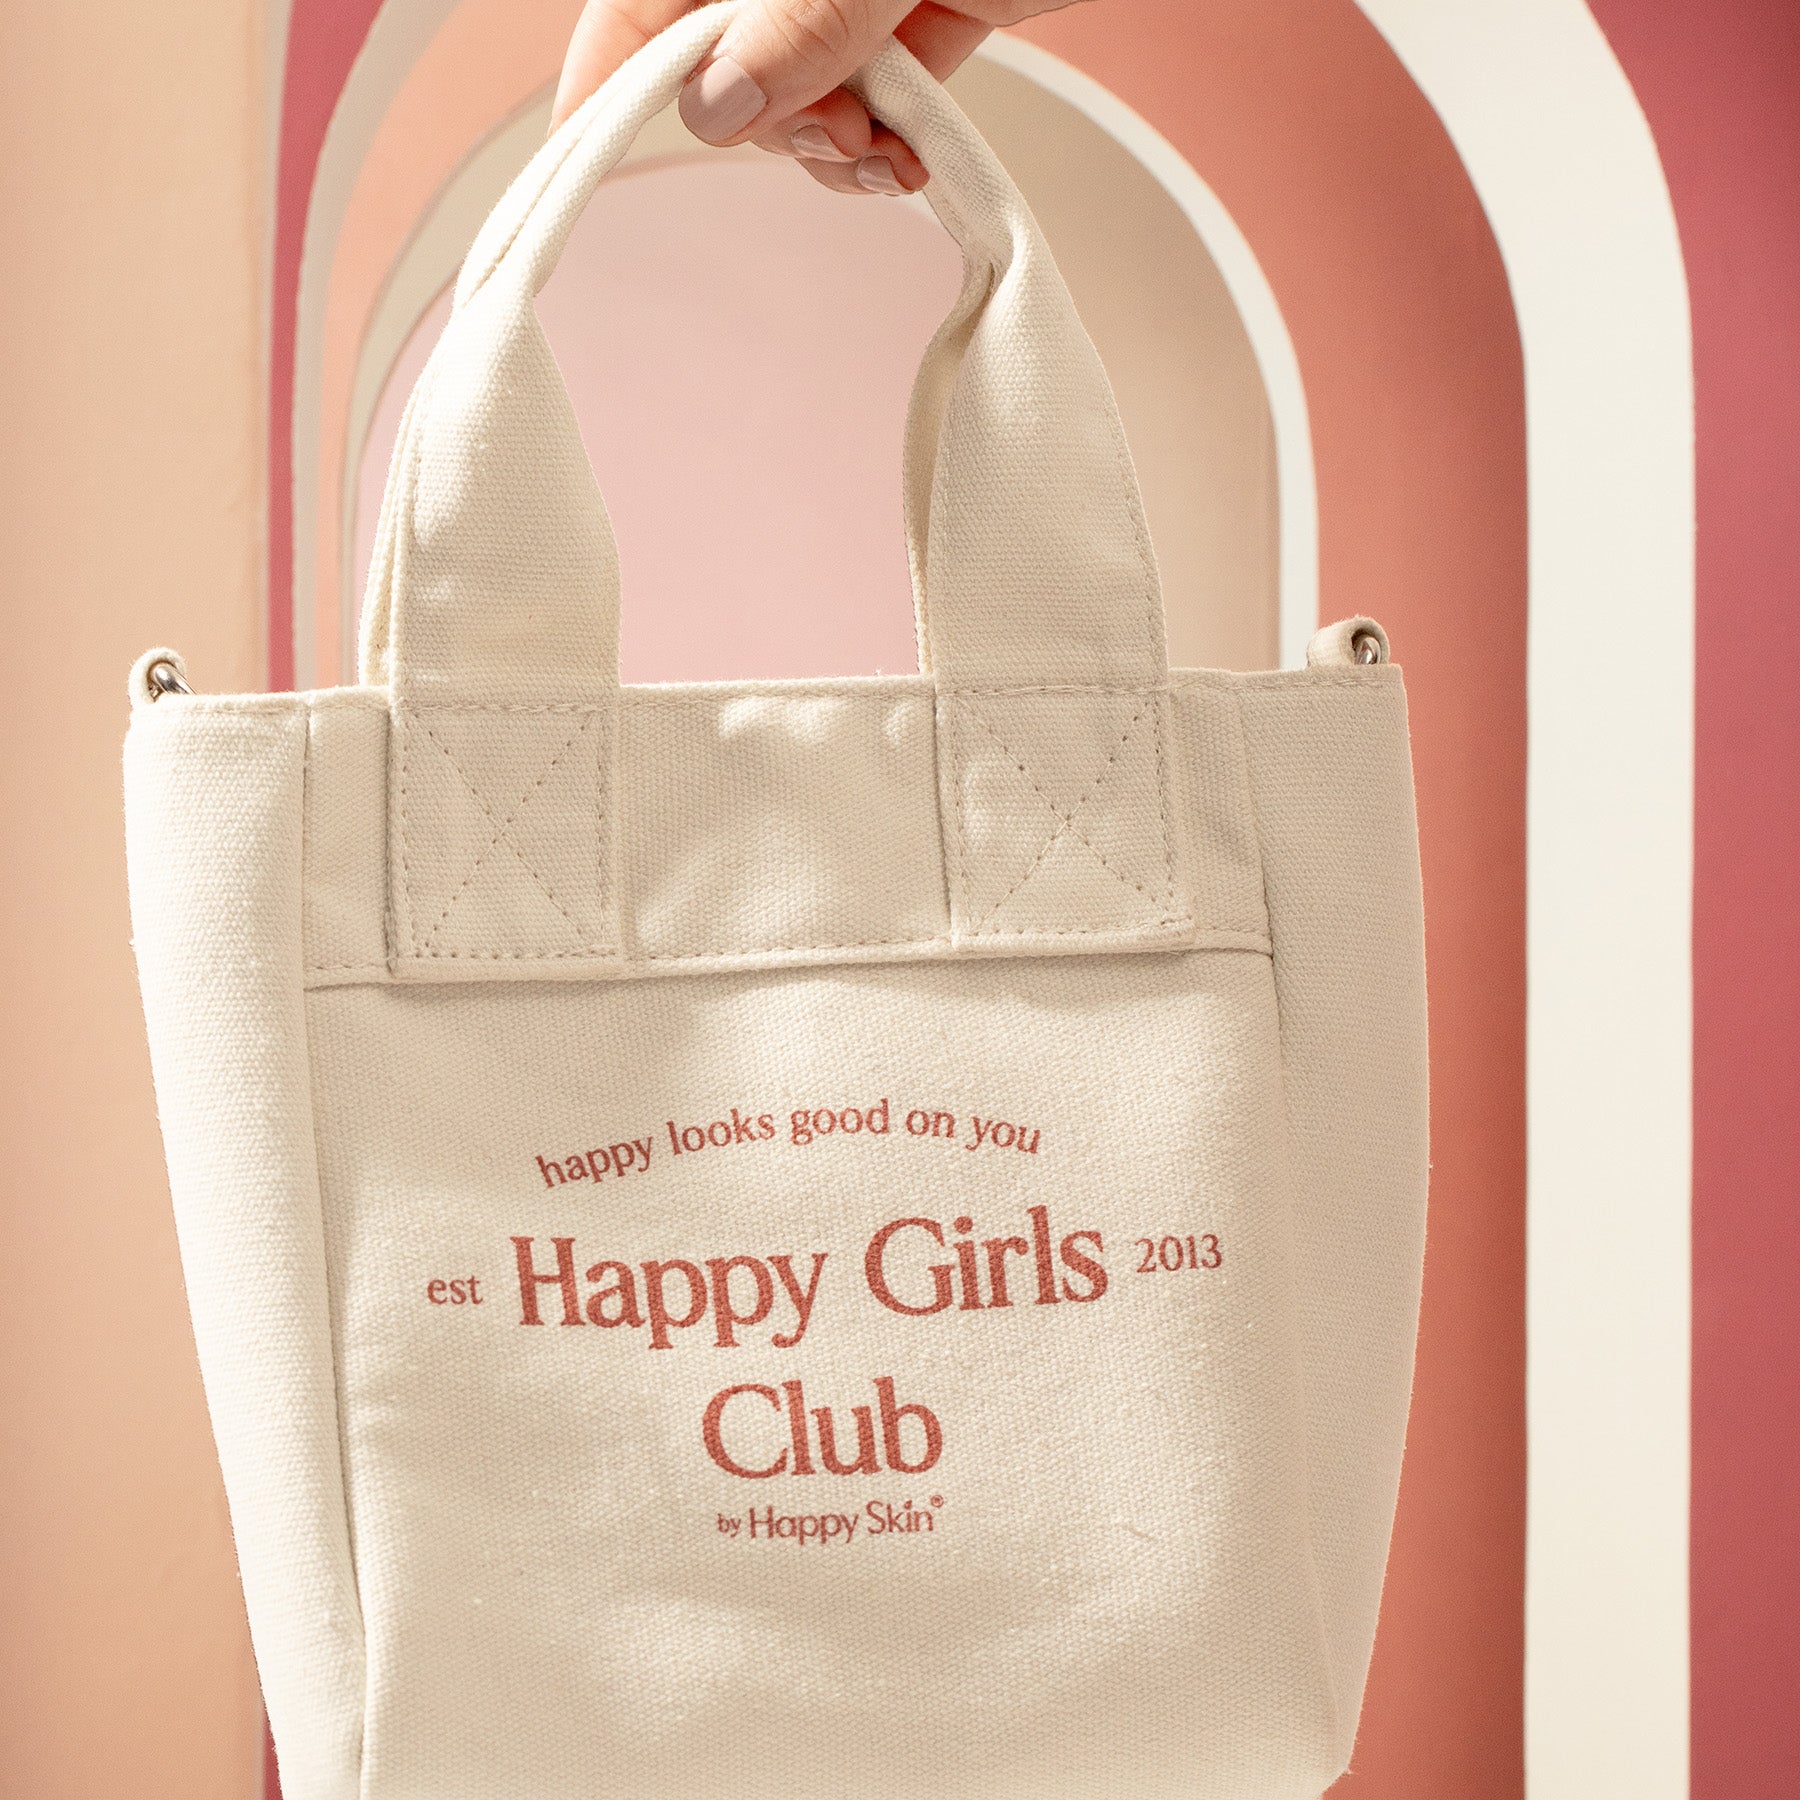 Happy Skin "Happy Girls Club" Micro Sling Tote